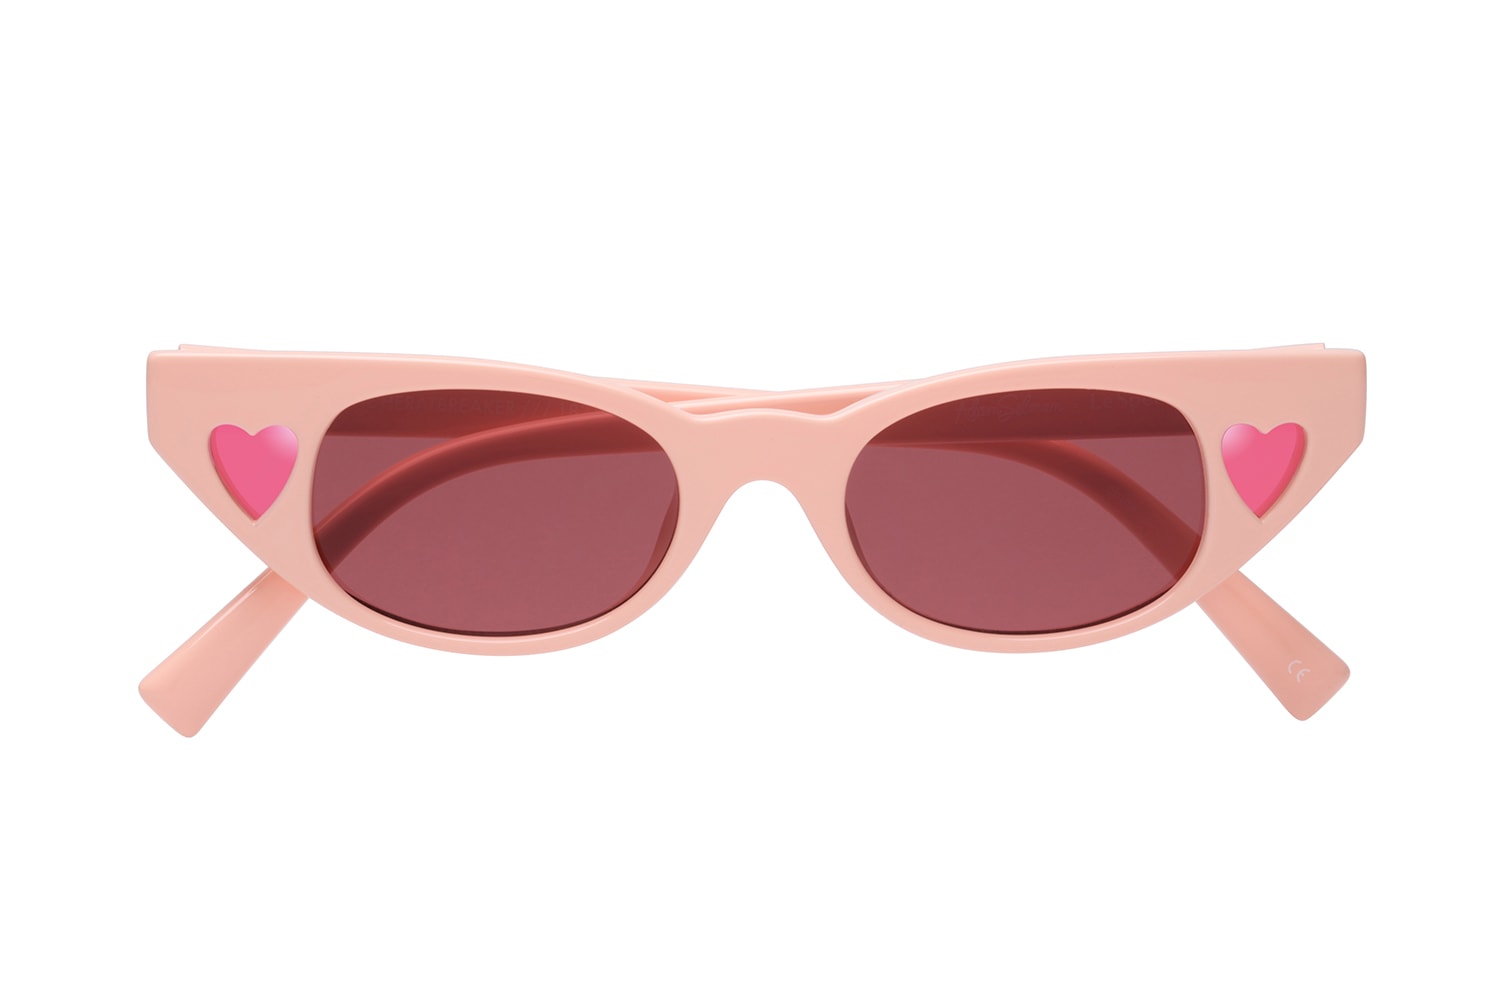 Adam Selman x Le Specs Summer 2018 Sunglasses Collection Eyewear Last Lolita Cat Eye Summer 2018 June Release Date Price Where to Buy Pink Heart